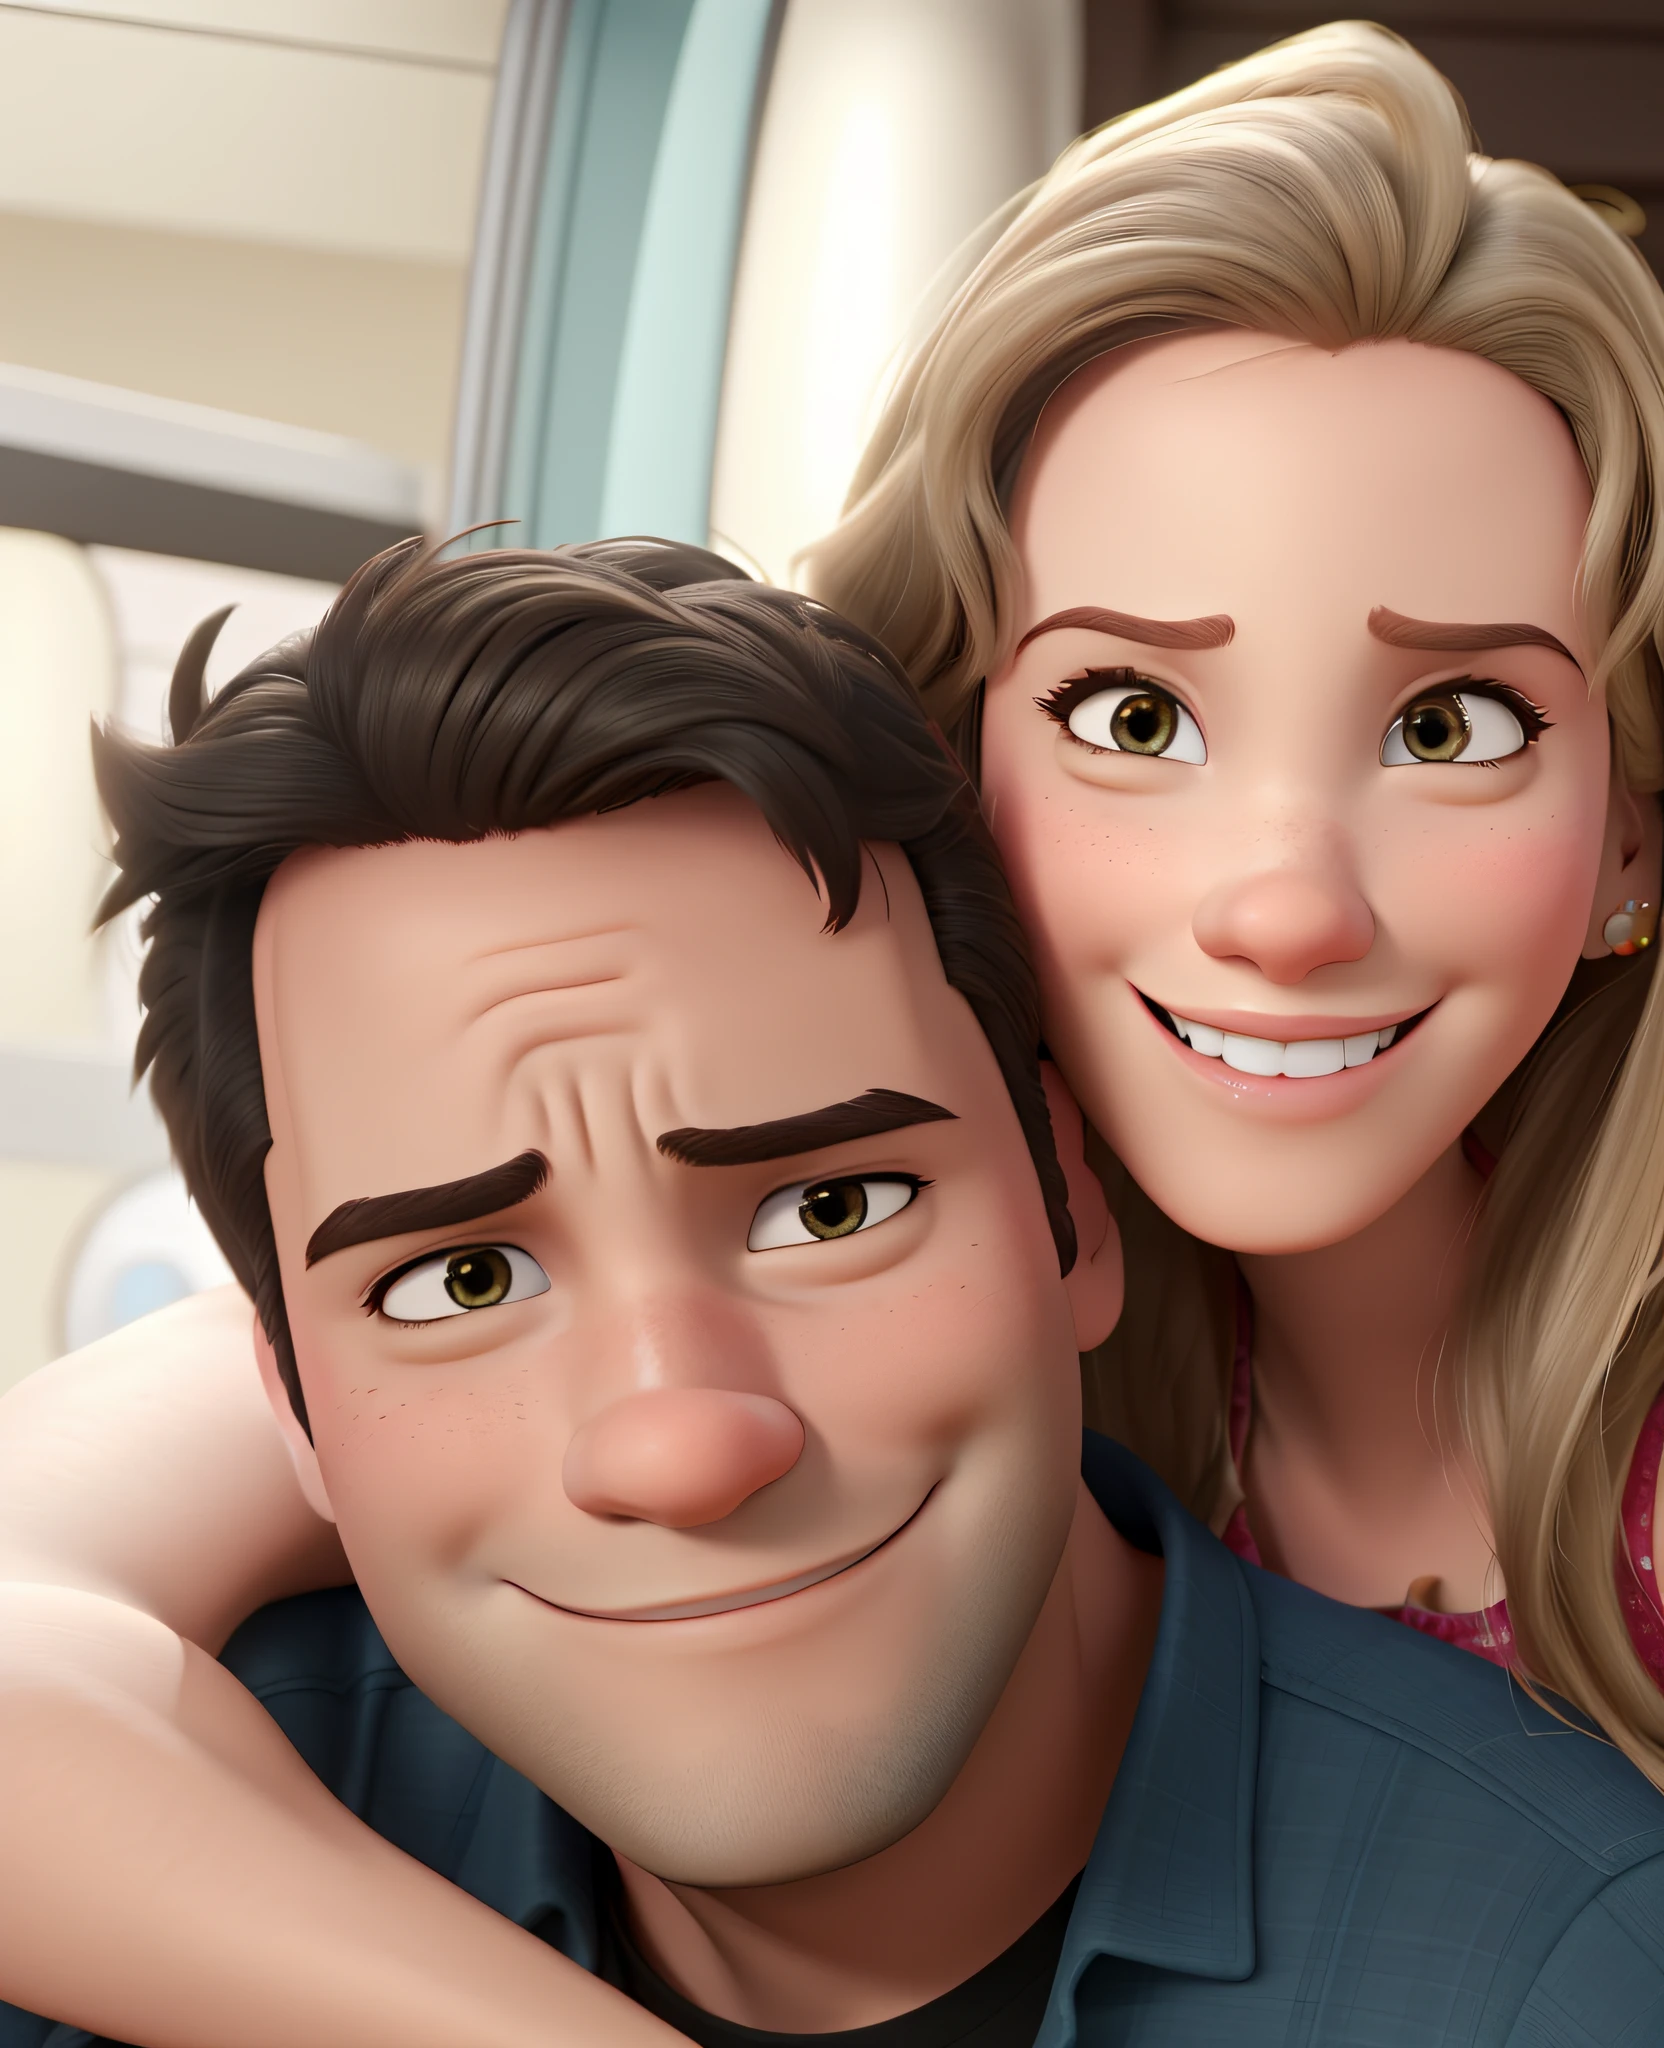 disney pixar style couple, high qualiy, best qualityer